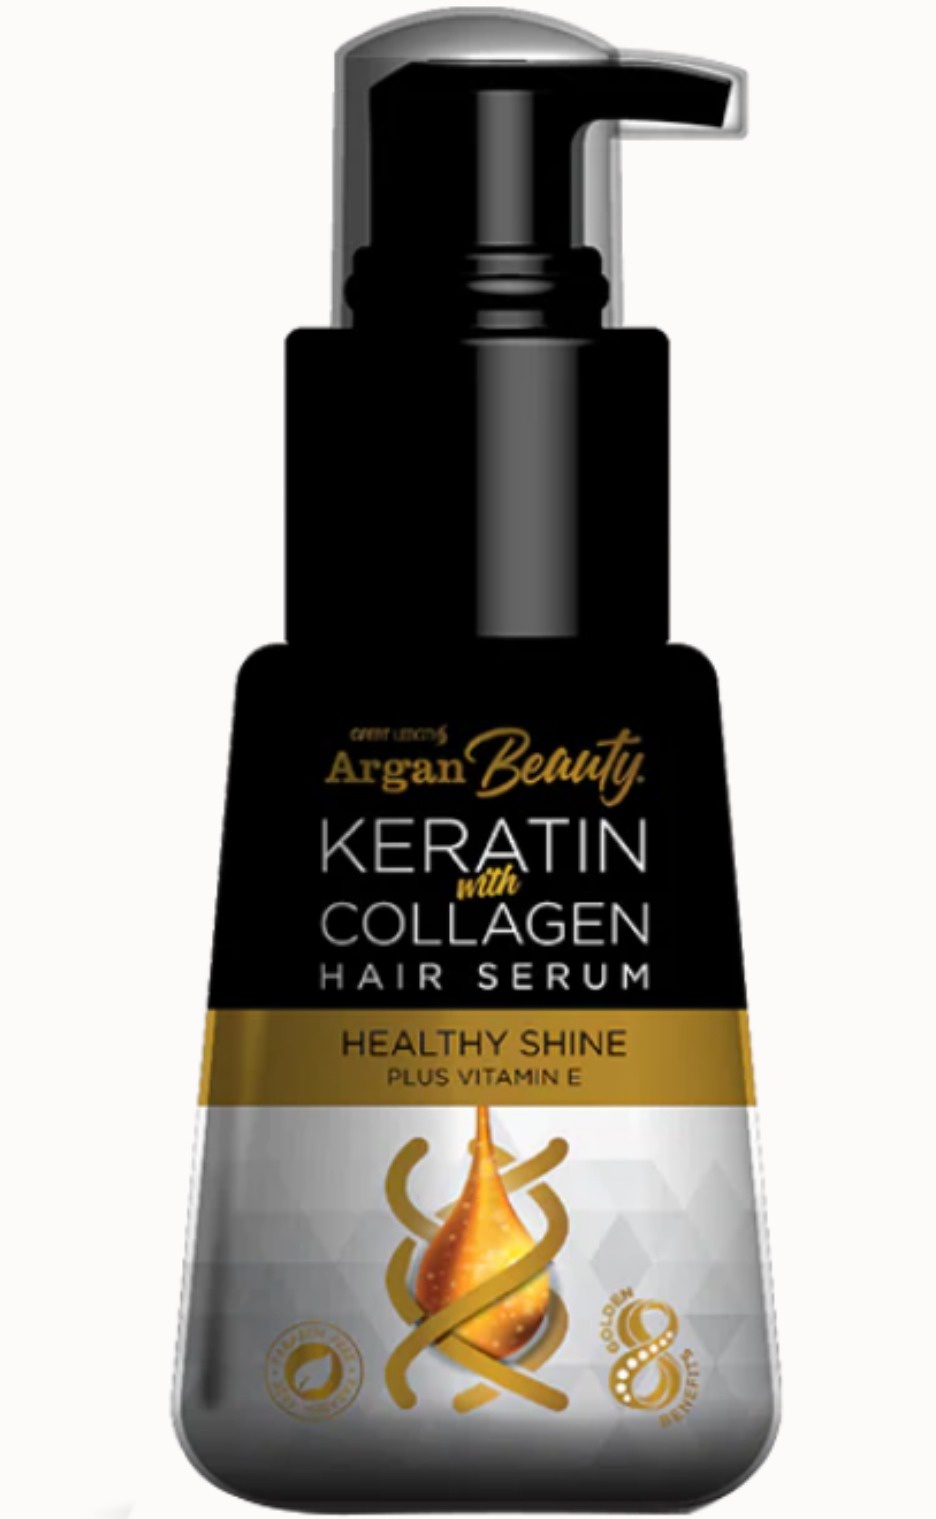 Great Lengths Argan Beauty Keratin With Collagen Hair Serum - Healthy Shine